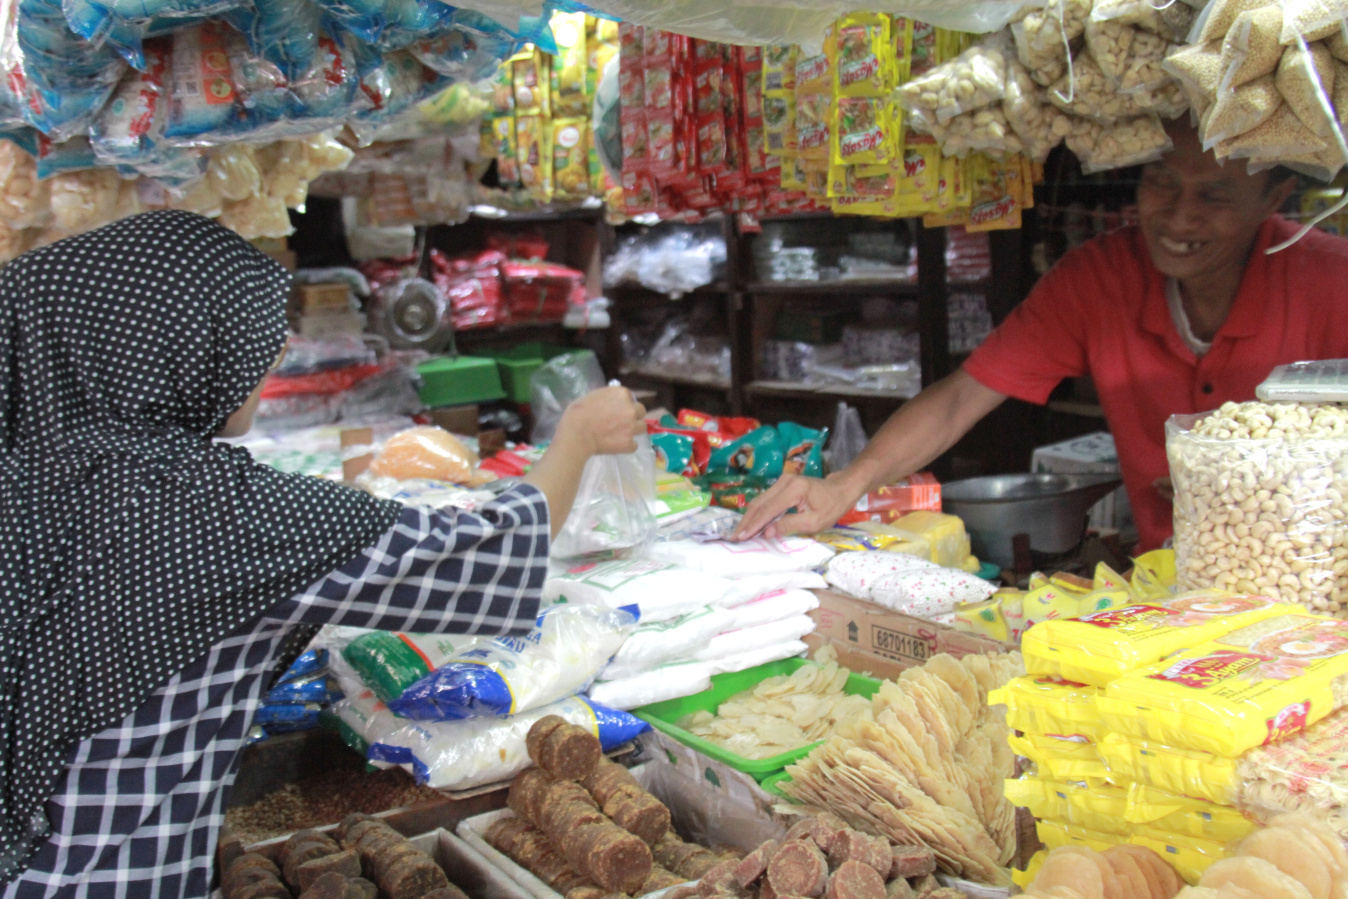 Jelang bulan suci Ramadhan harga sembako mulai mengalami kenaikan di pasar tradisional Kebayoran Lama (Ashar/SinPo.id)